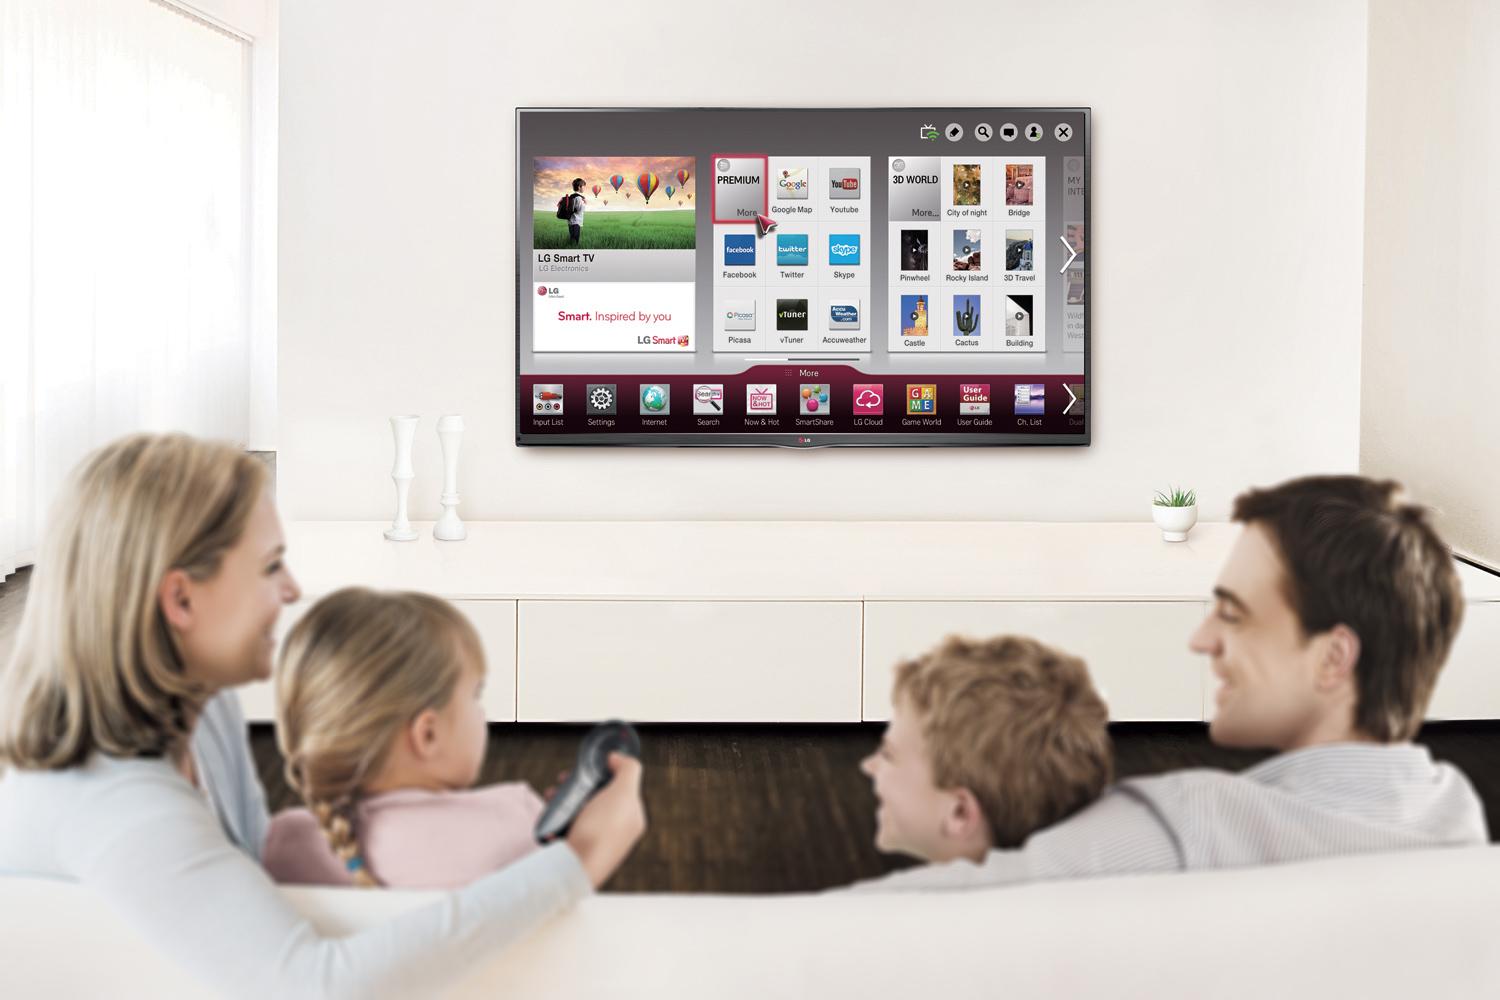 LG Smart TV interface example.